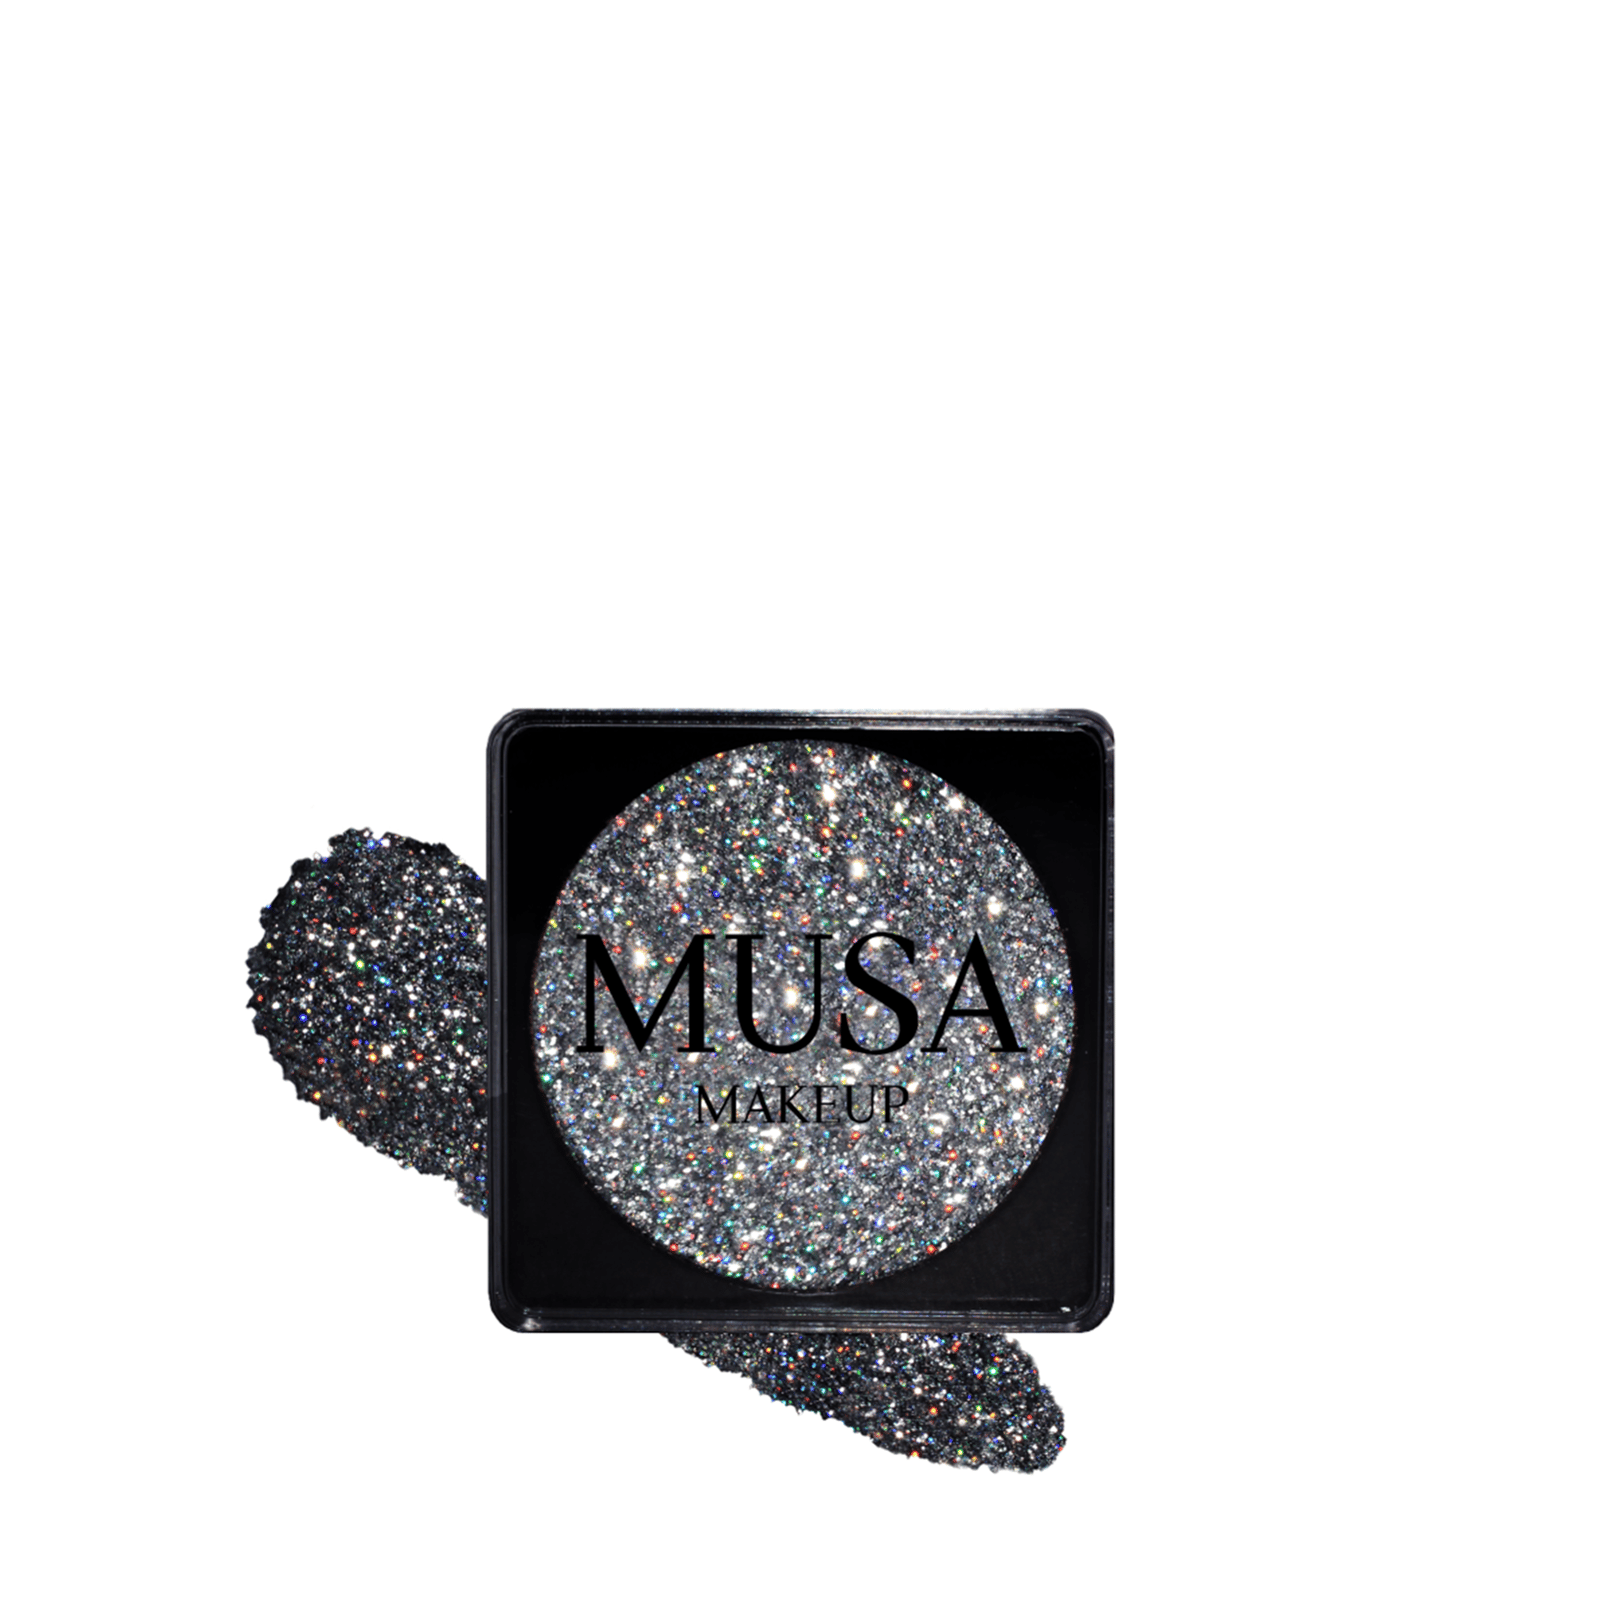 MUSA Makeup Creamy Glitter Atalia 4g